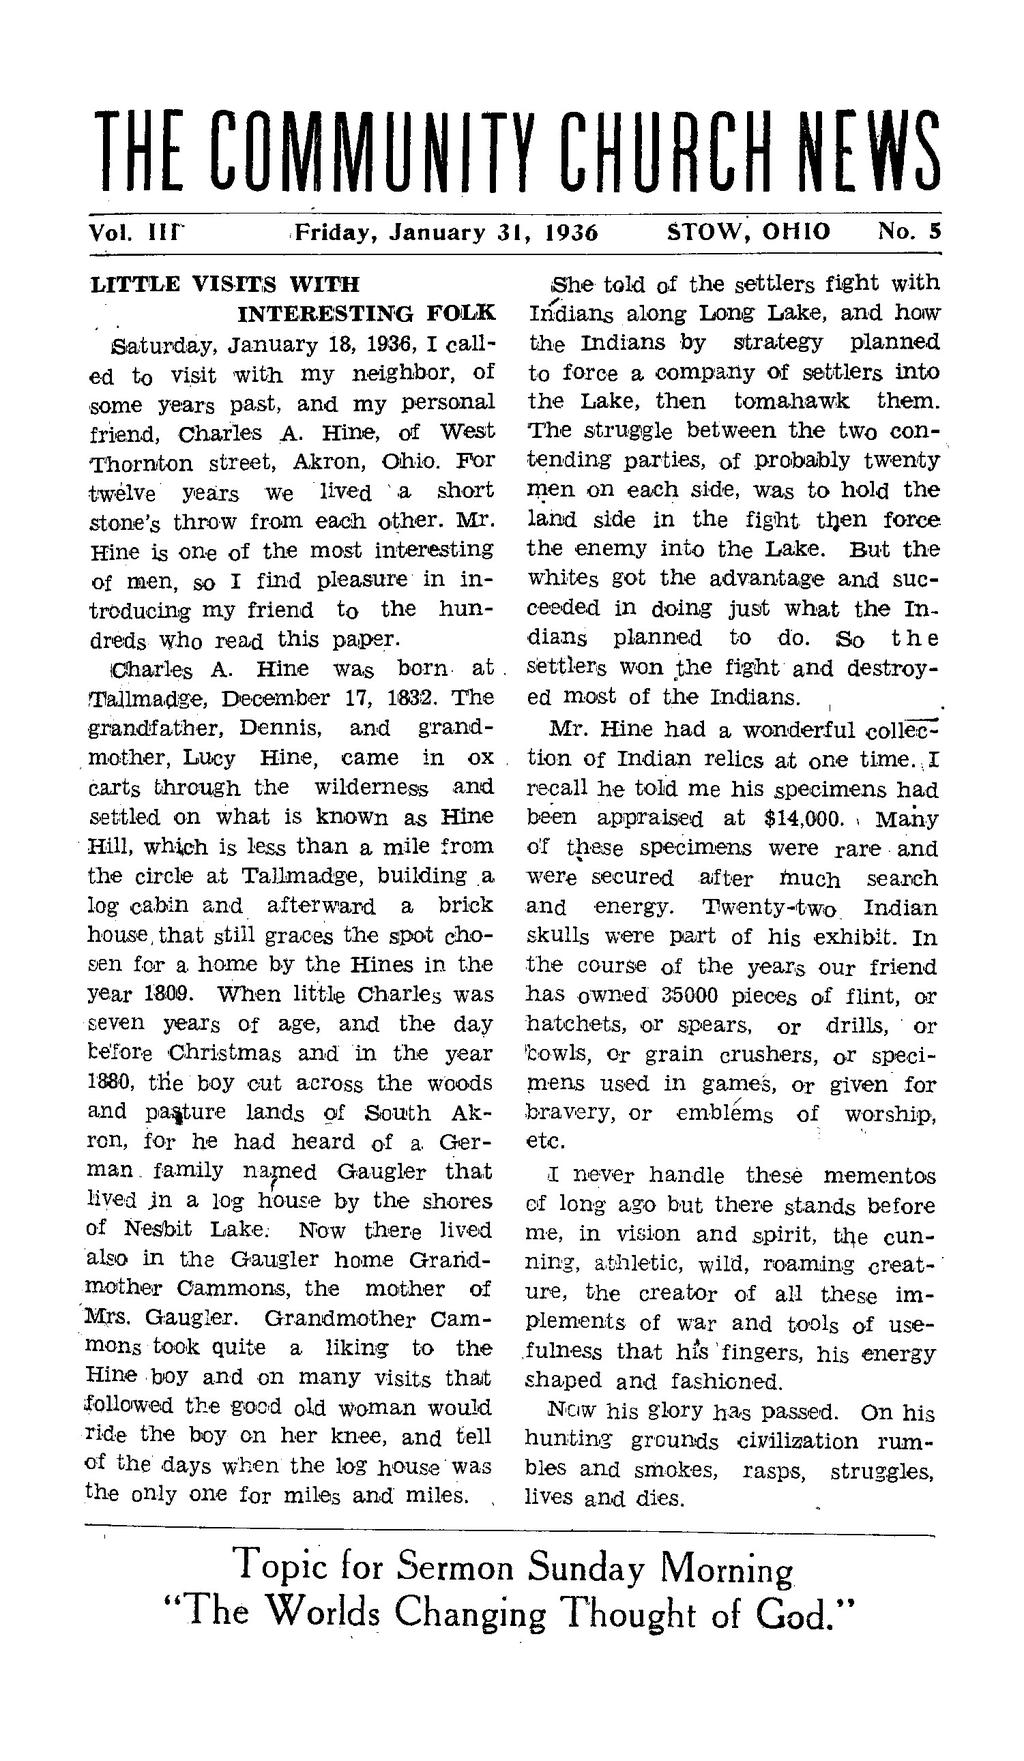 THE COMMUNITY CHURCH NEWS Vol. IIP Friday, January 31, 1936 STOW, OHIO No.